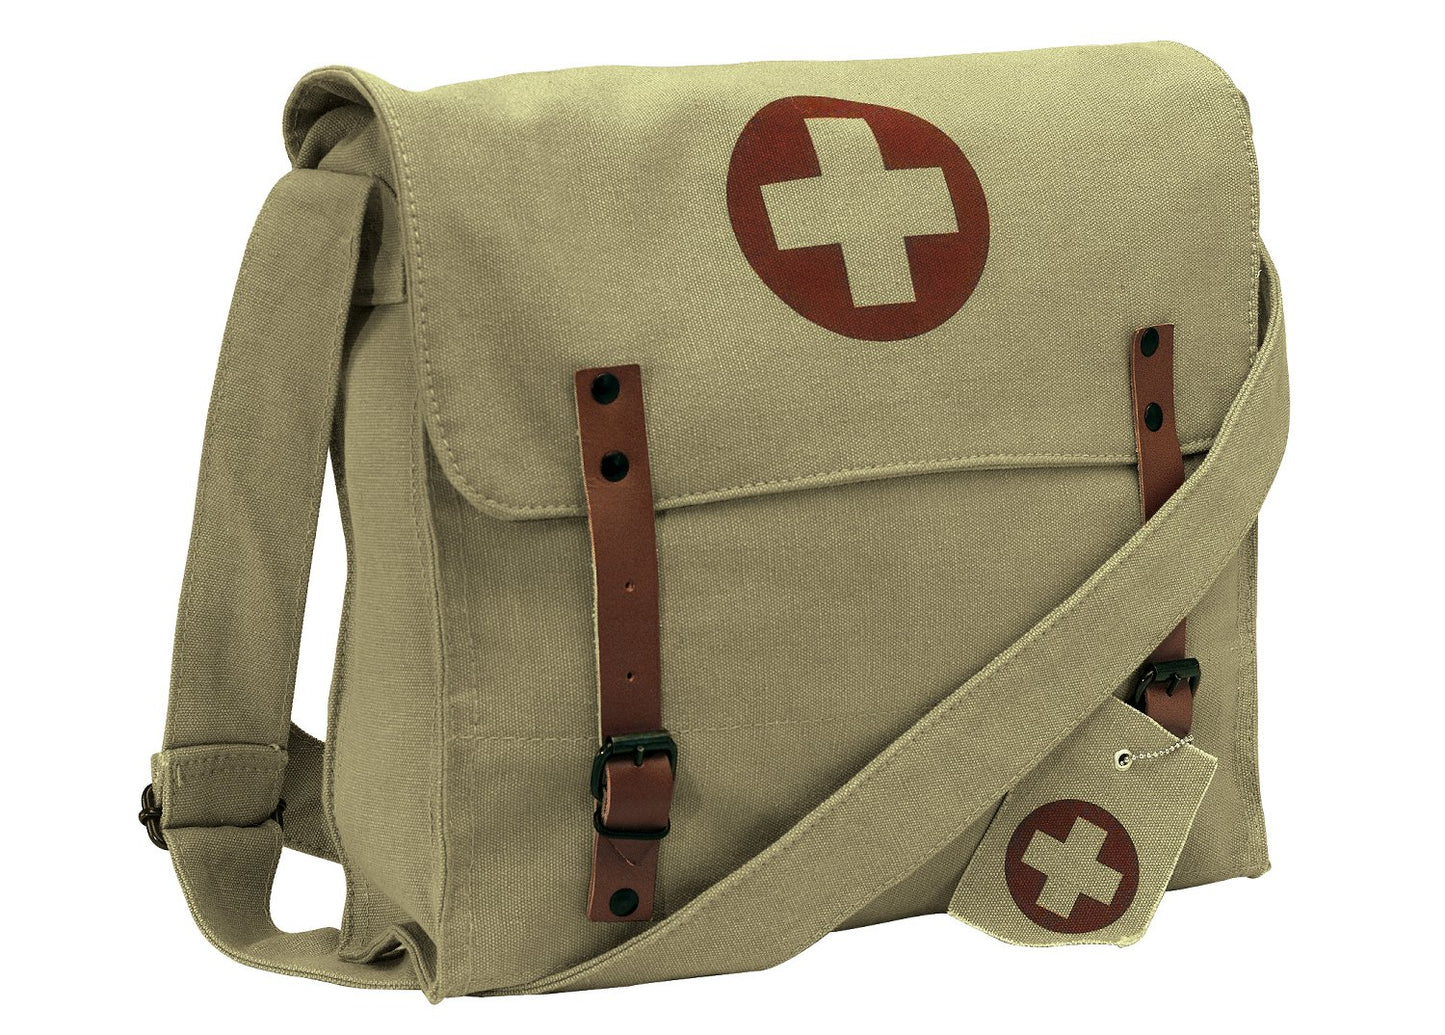 Rothco Vintage Medic Canvas Bag With Cross